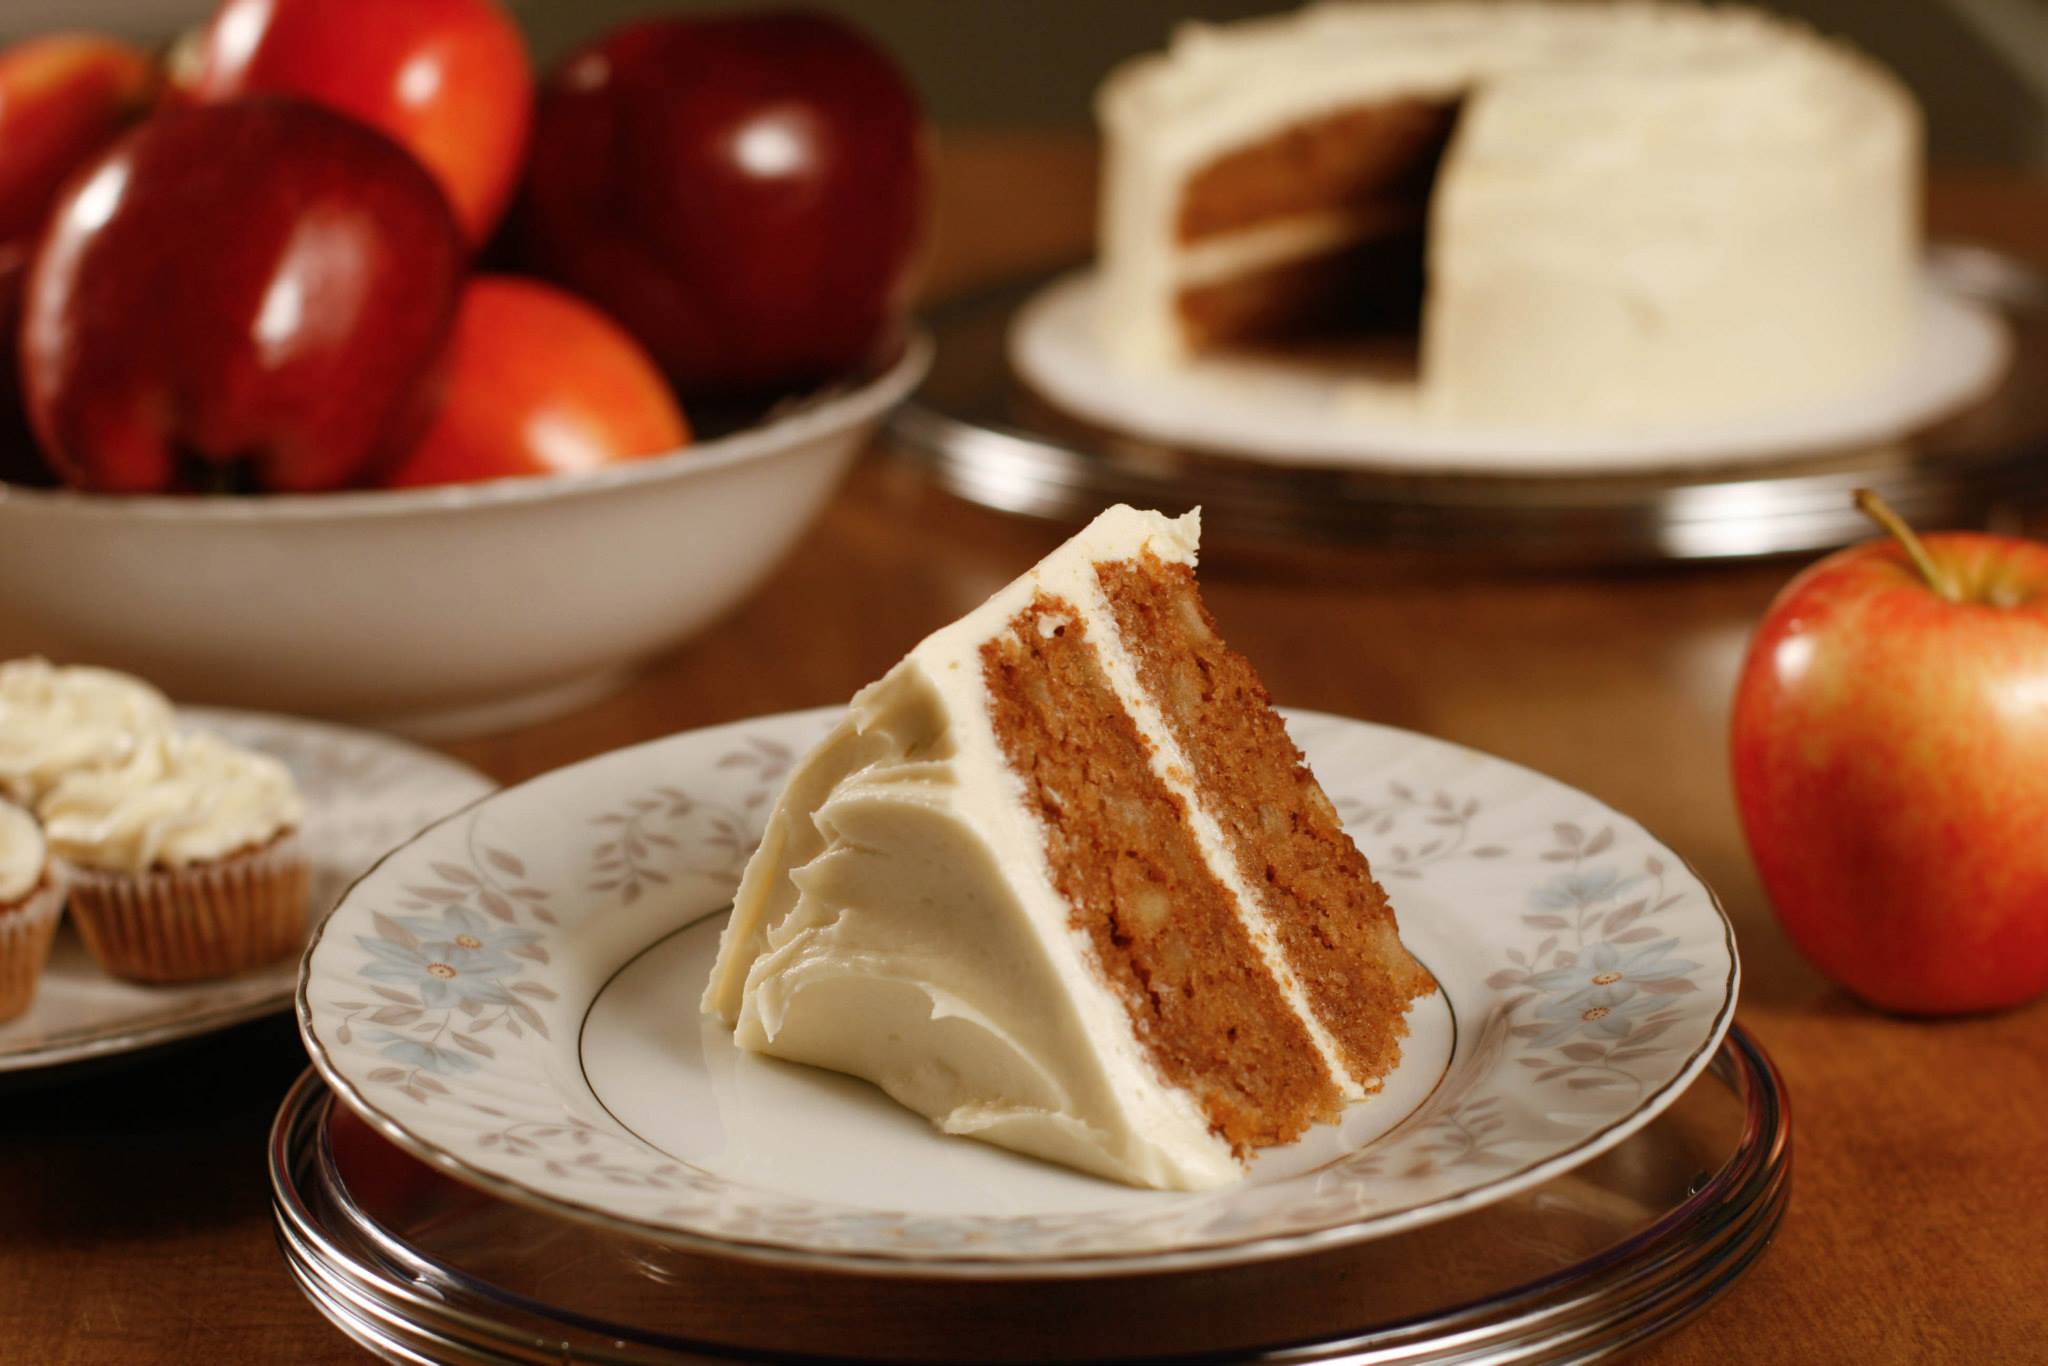 Original Mortgage Apple Cake by Mortgage Apple Cakes | Goldbelly | Apple  mortgage cake recipe, Bakery cakes, Apple mortgage cake